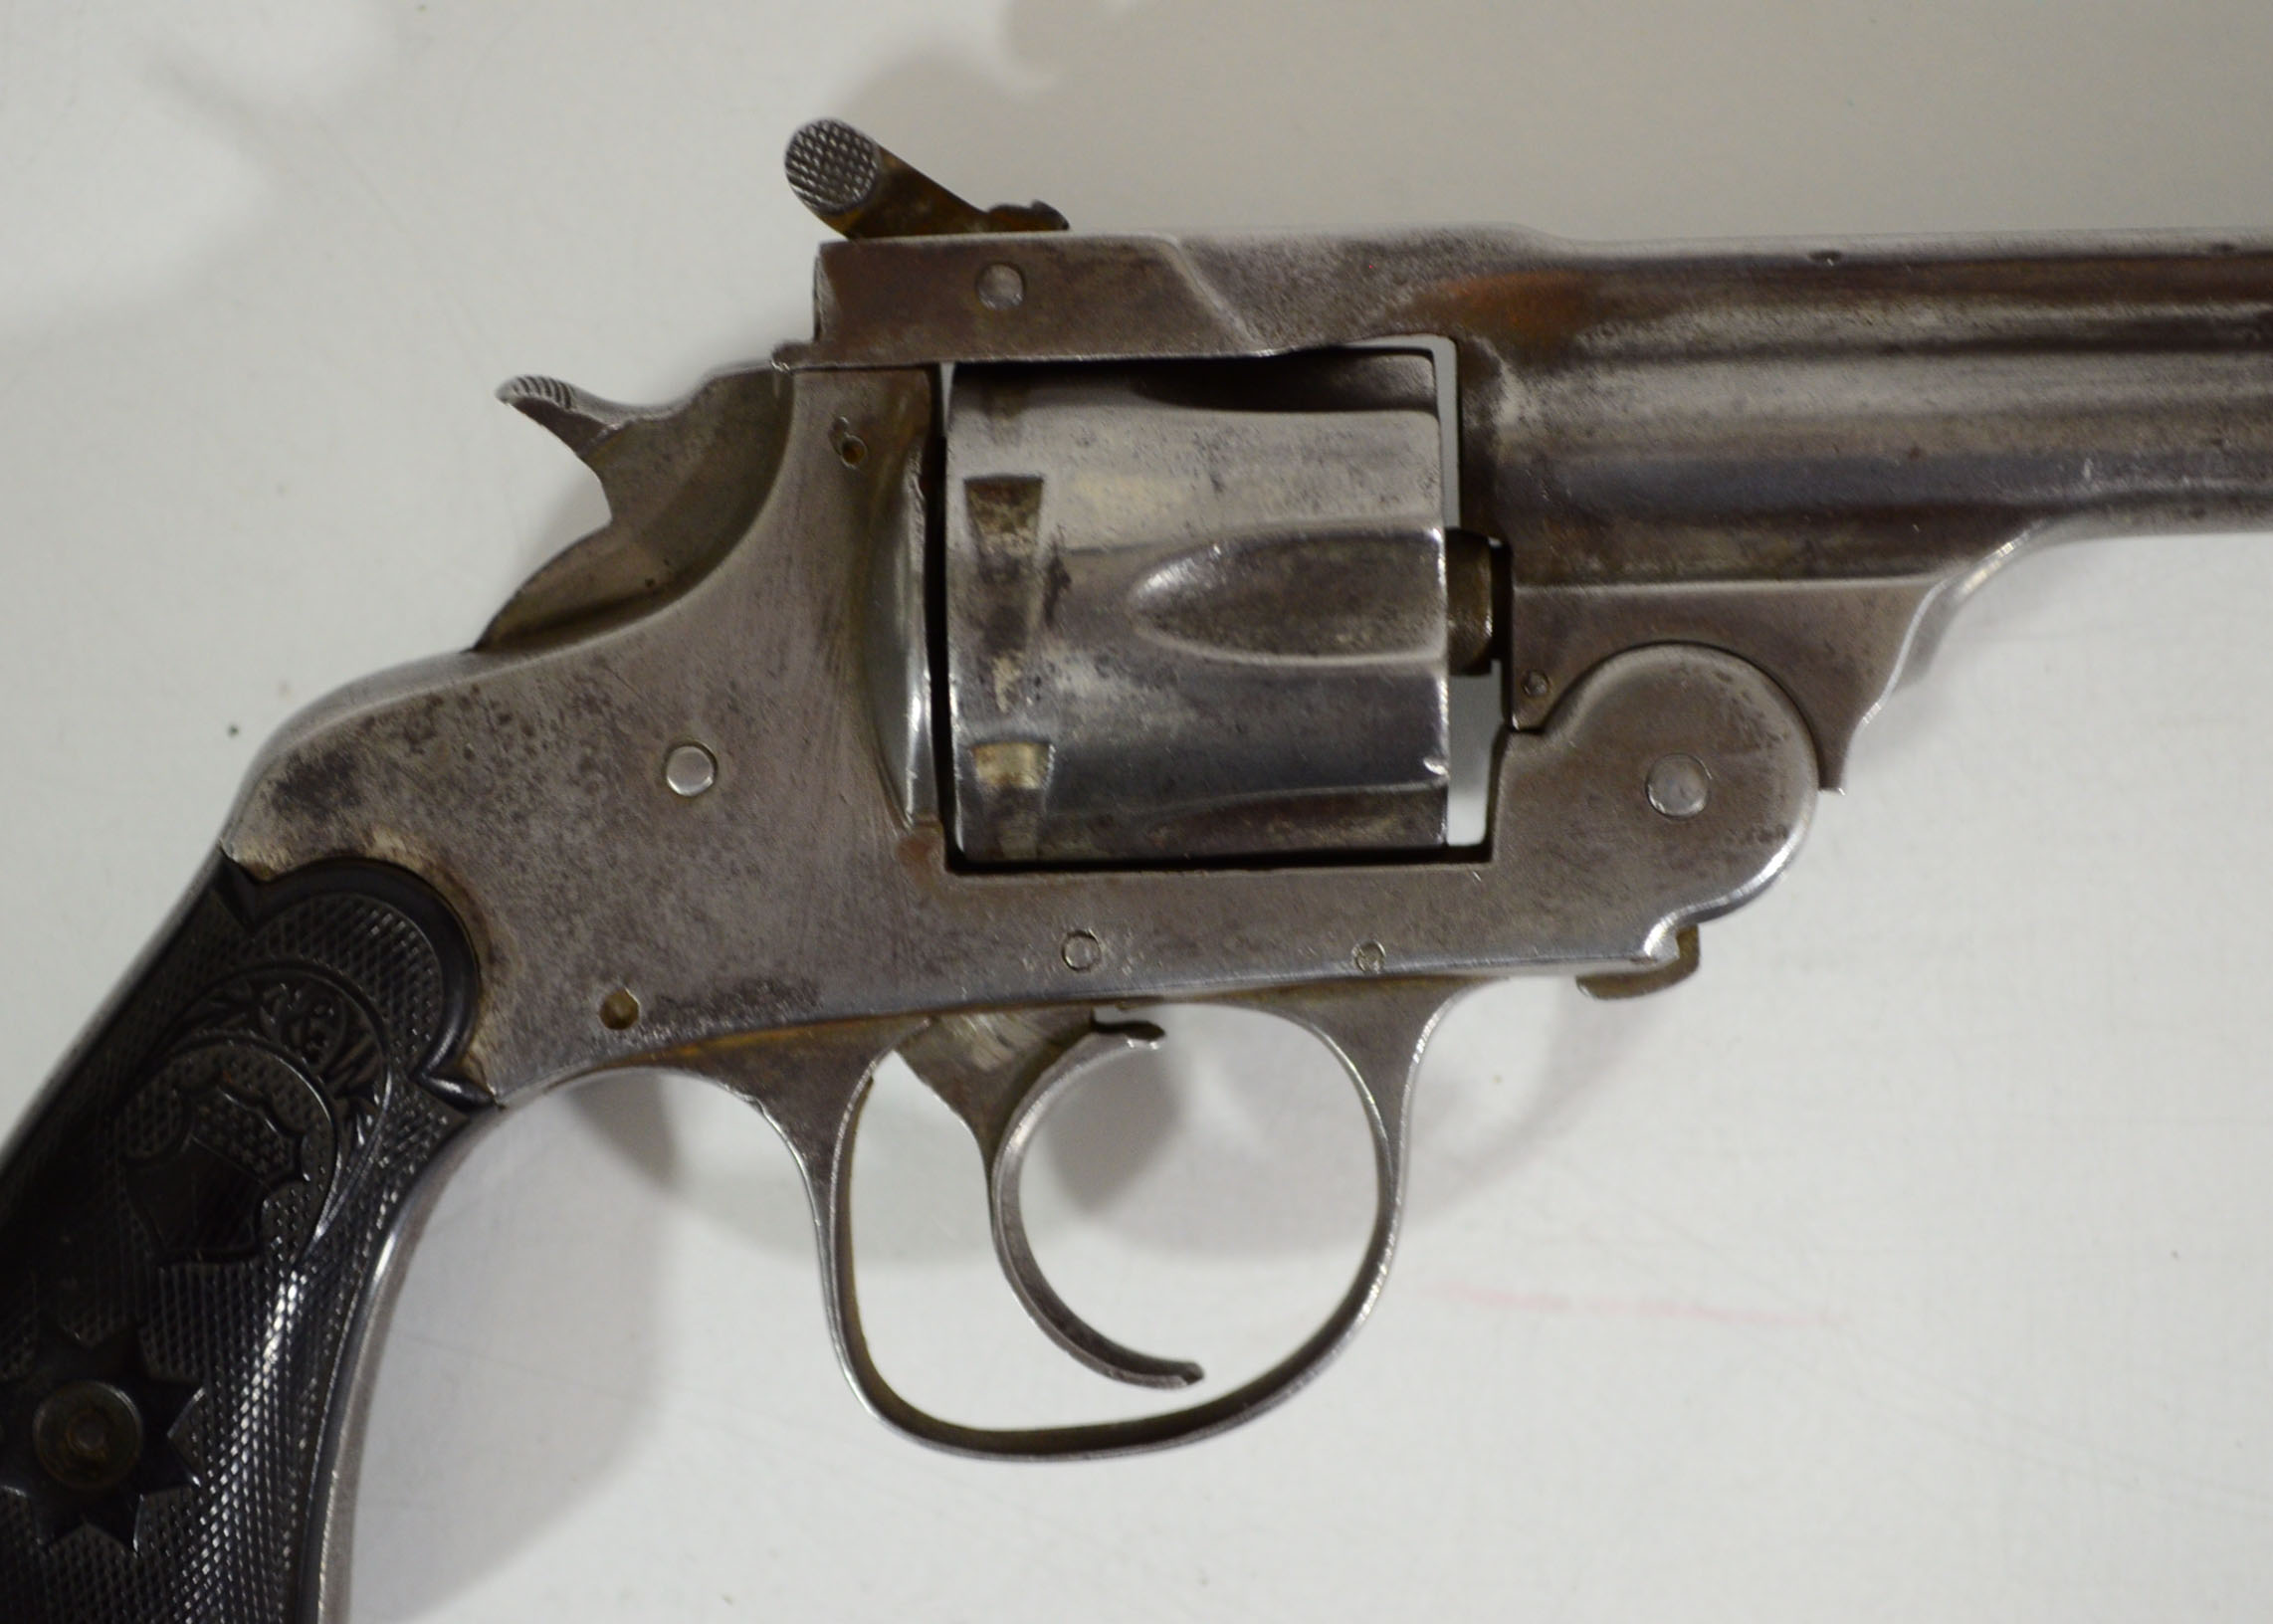 forehand arms company revolver